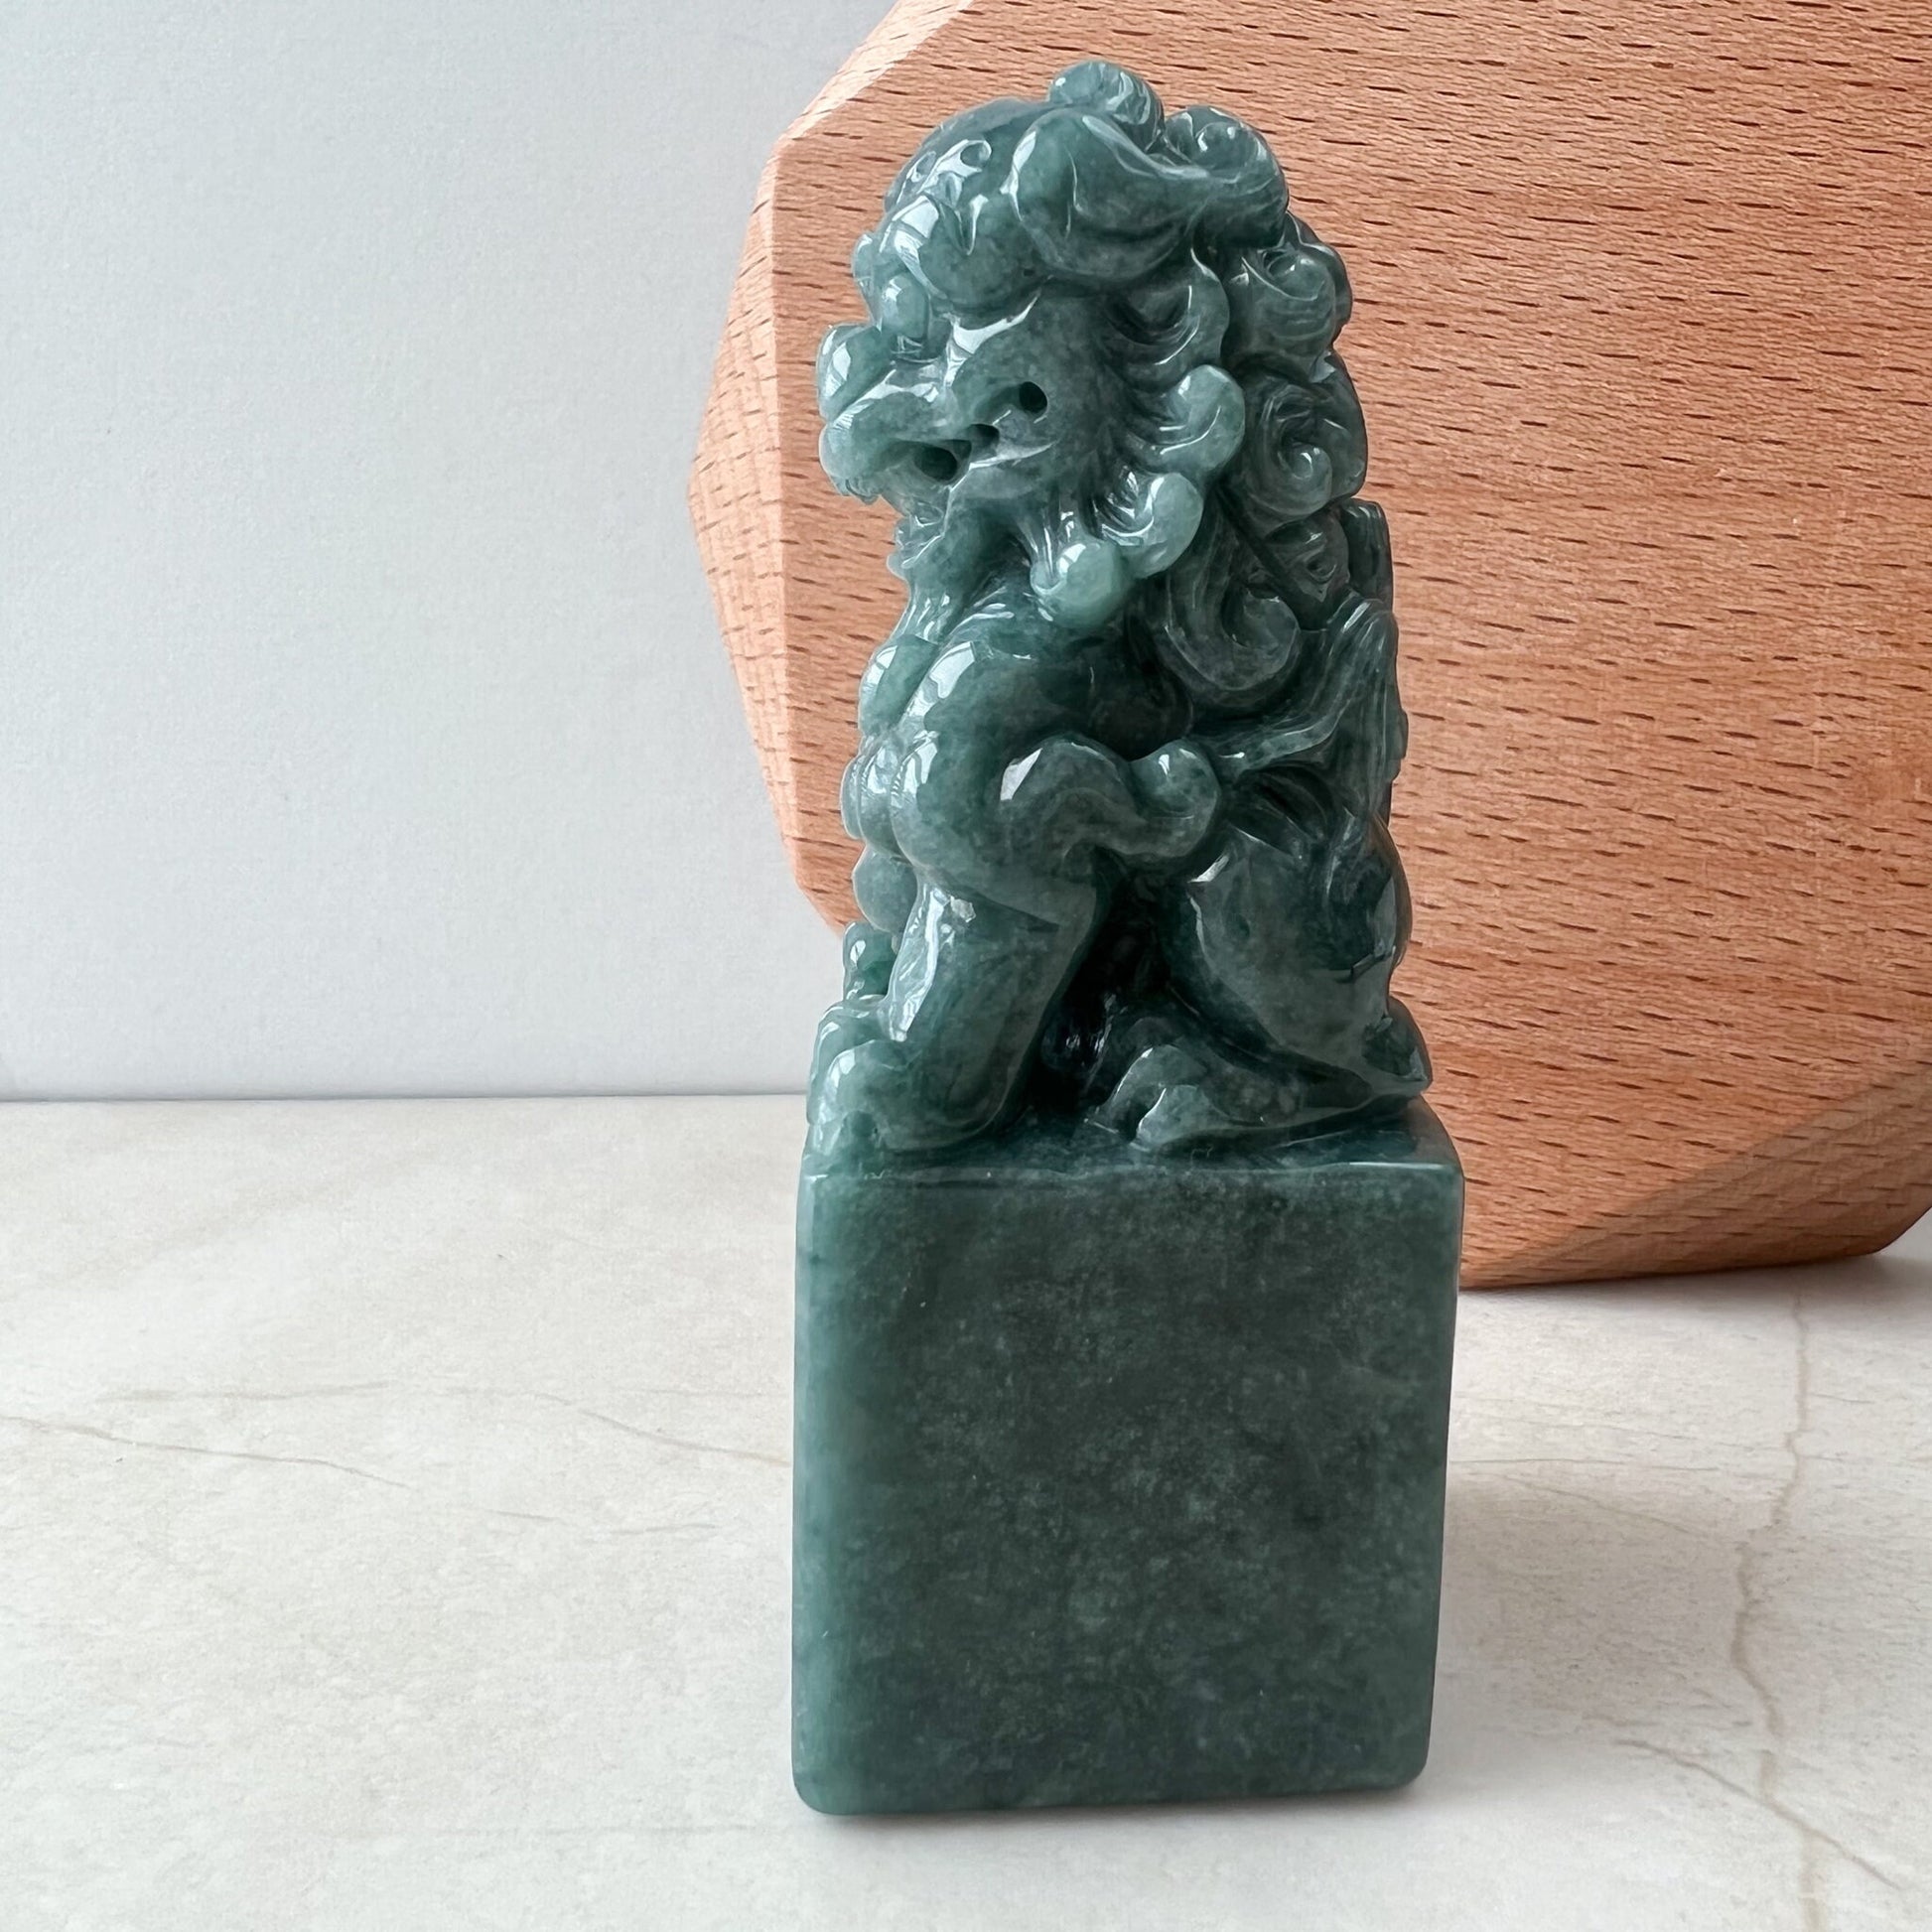 Jadeite Jade Lion, Foo Dog, Chinese Guardian Lion, Chinese Hand Carved Statue, Figurine, Display, Decoration, Green Jade,ZYF-1221-1646801224 - AriaDesignCollection